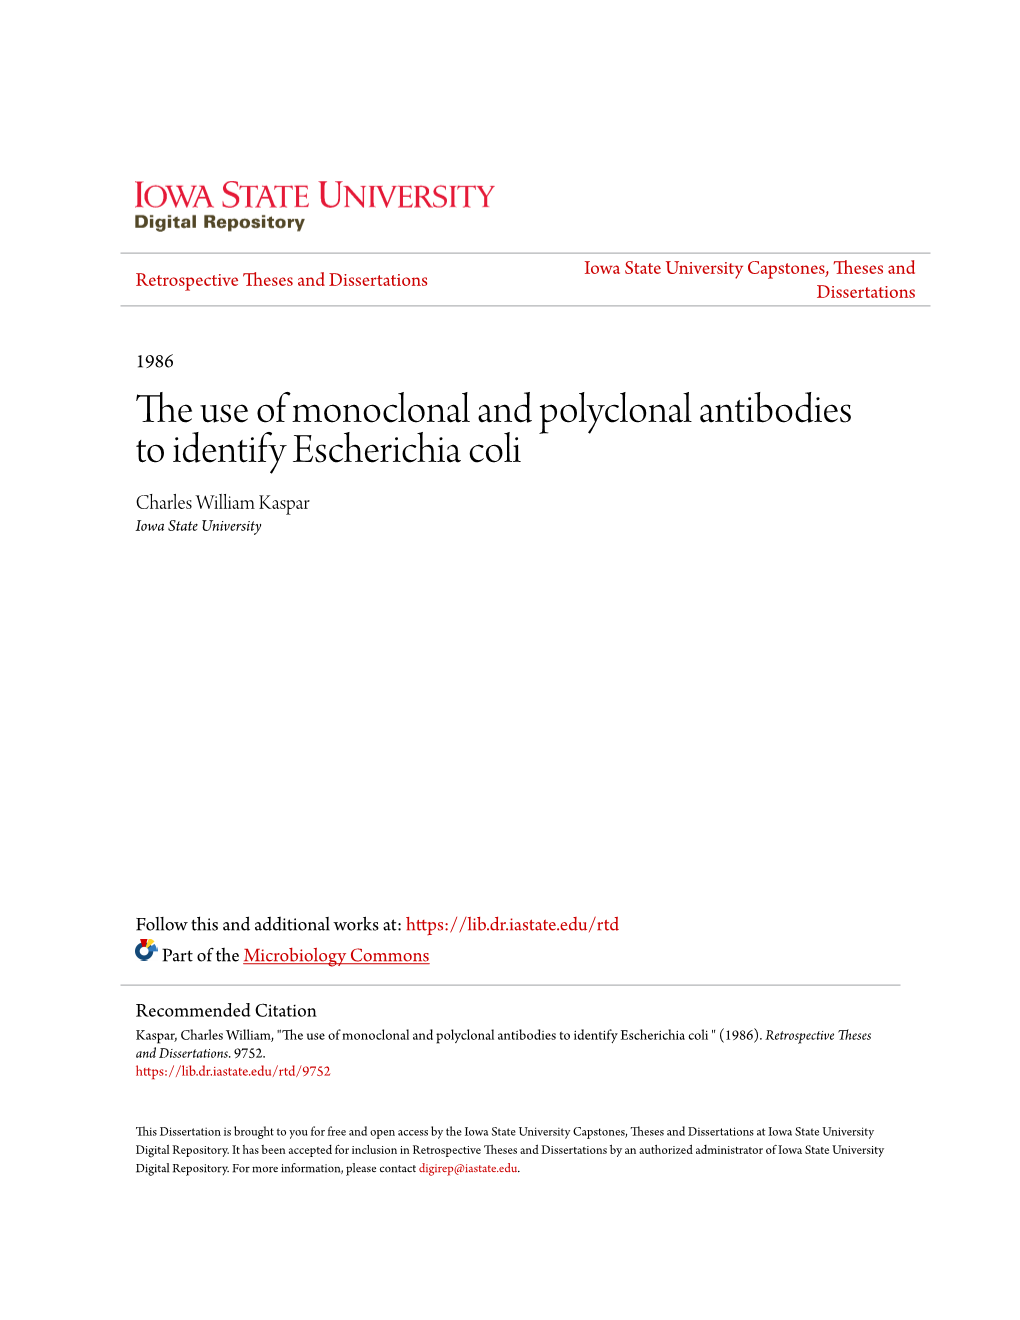 The Use of Monoclonal and Polyclonal Antibodies to Identify Escherichia Coli " (1986)